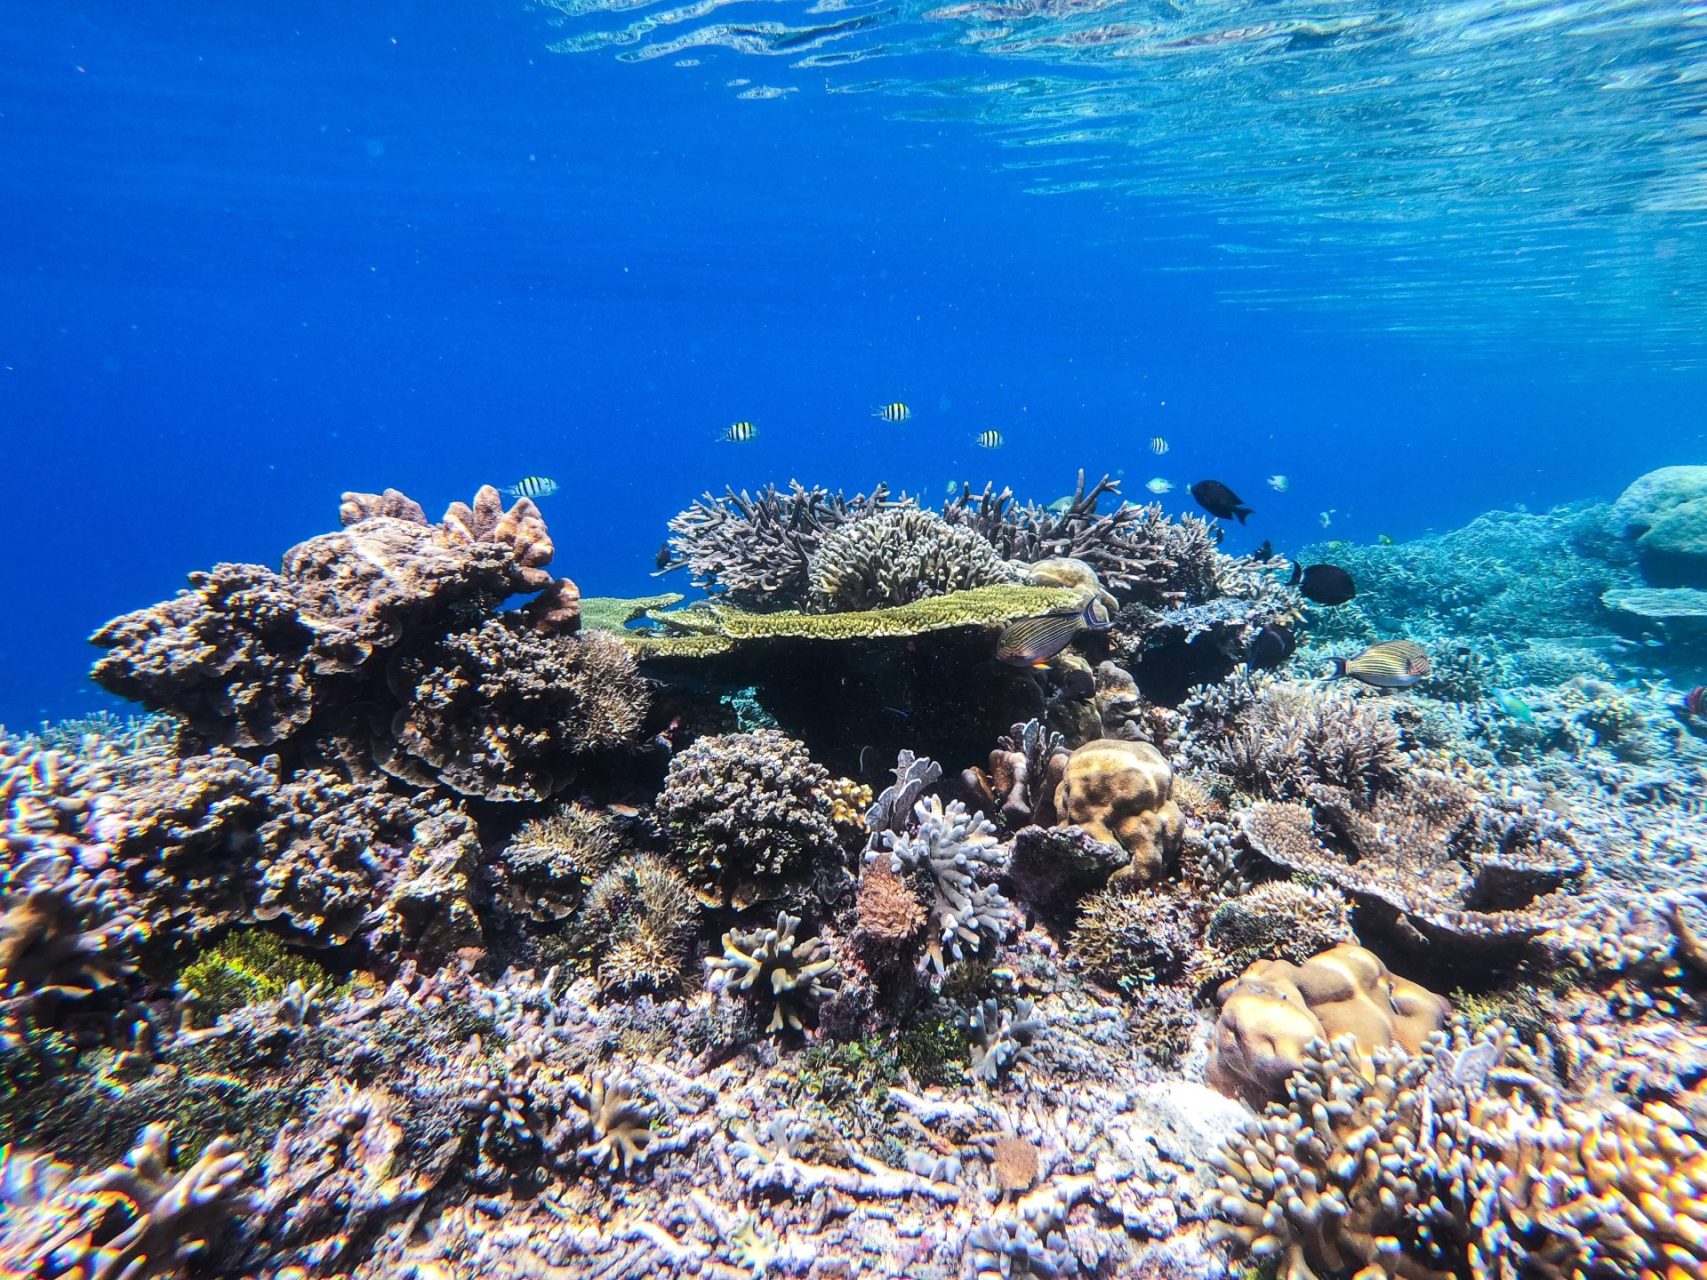 Snorkeling and scuba diving coral reefs in Raja Ampat, Indonesia